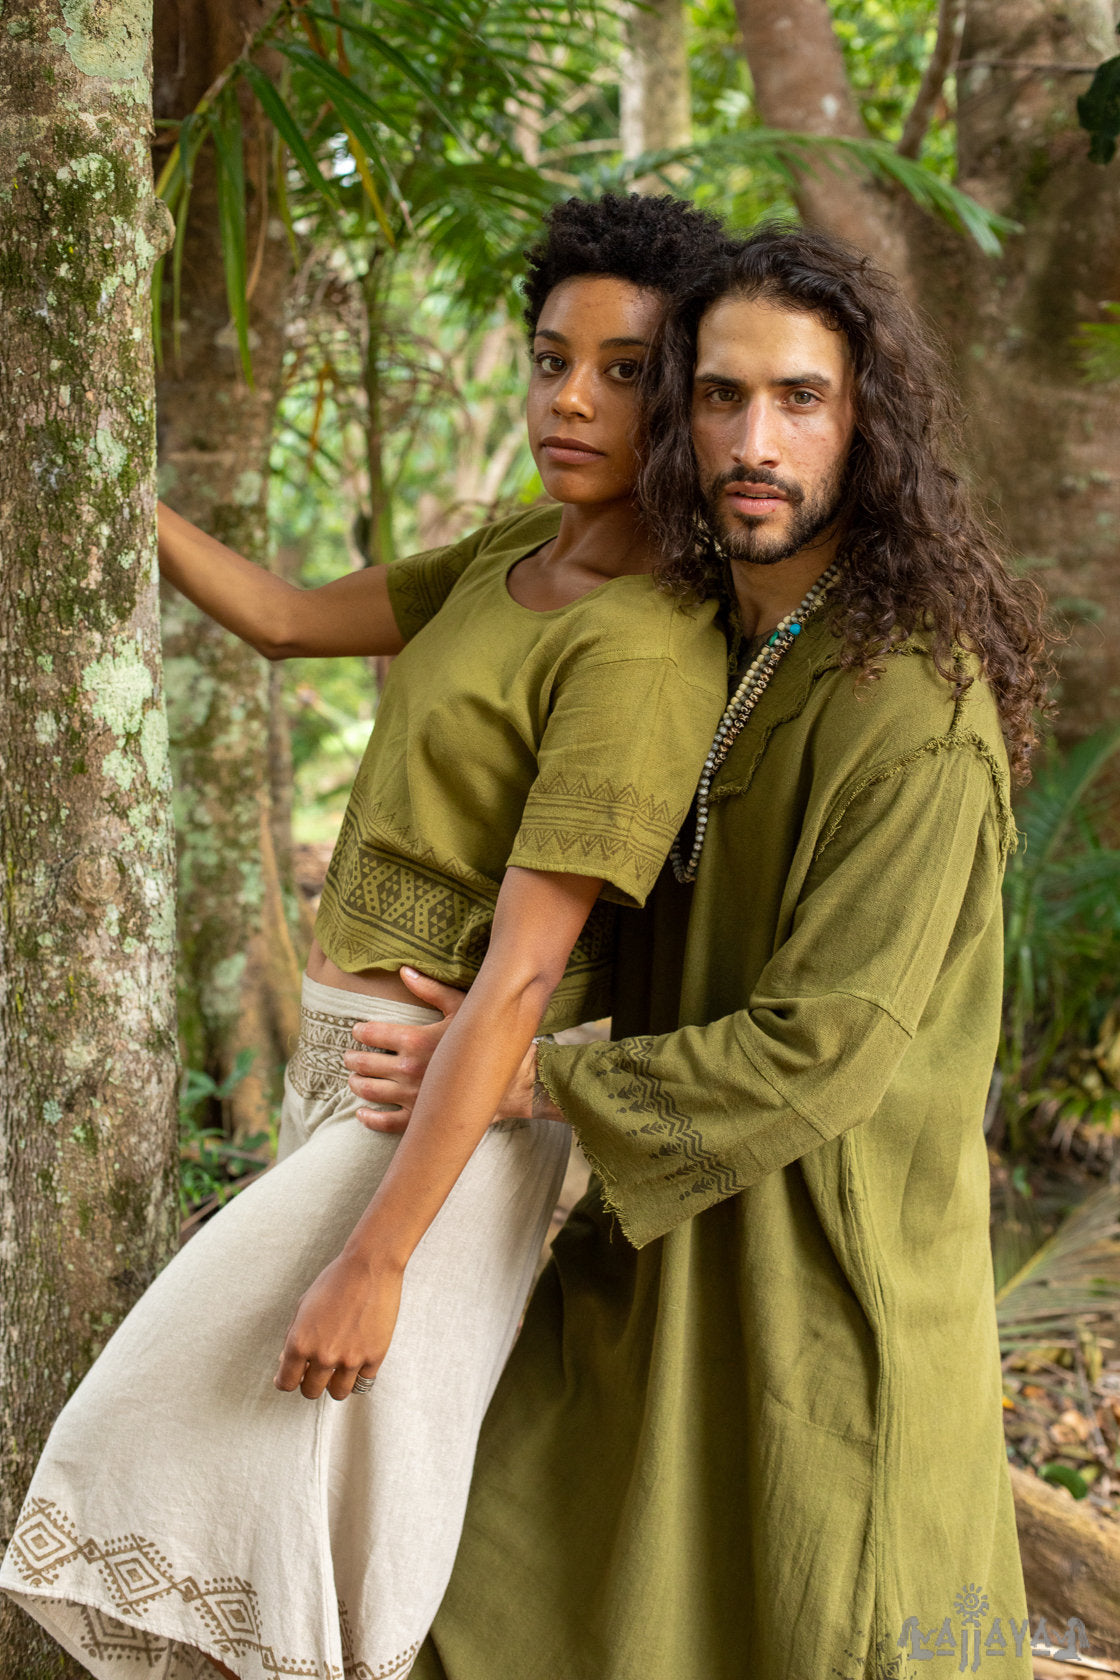 YOSEPH Green Aramaic Gown Kurta Long Top Mens Dress Shirt Biblical Natural Cotton Handwoven Block Print Natural Plant Dye Ceremony AJJAYA